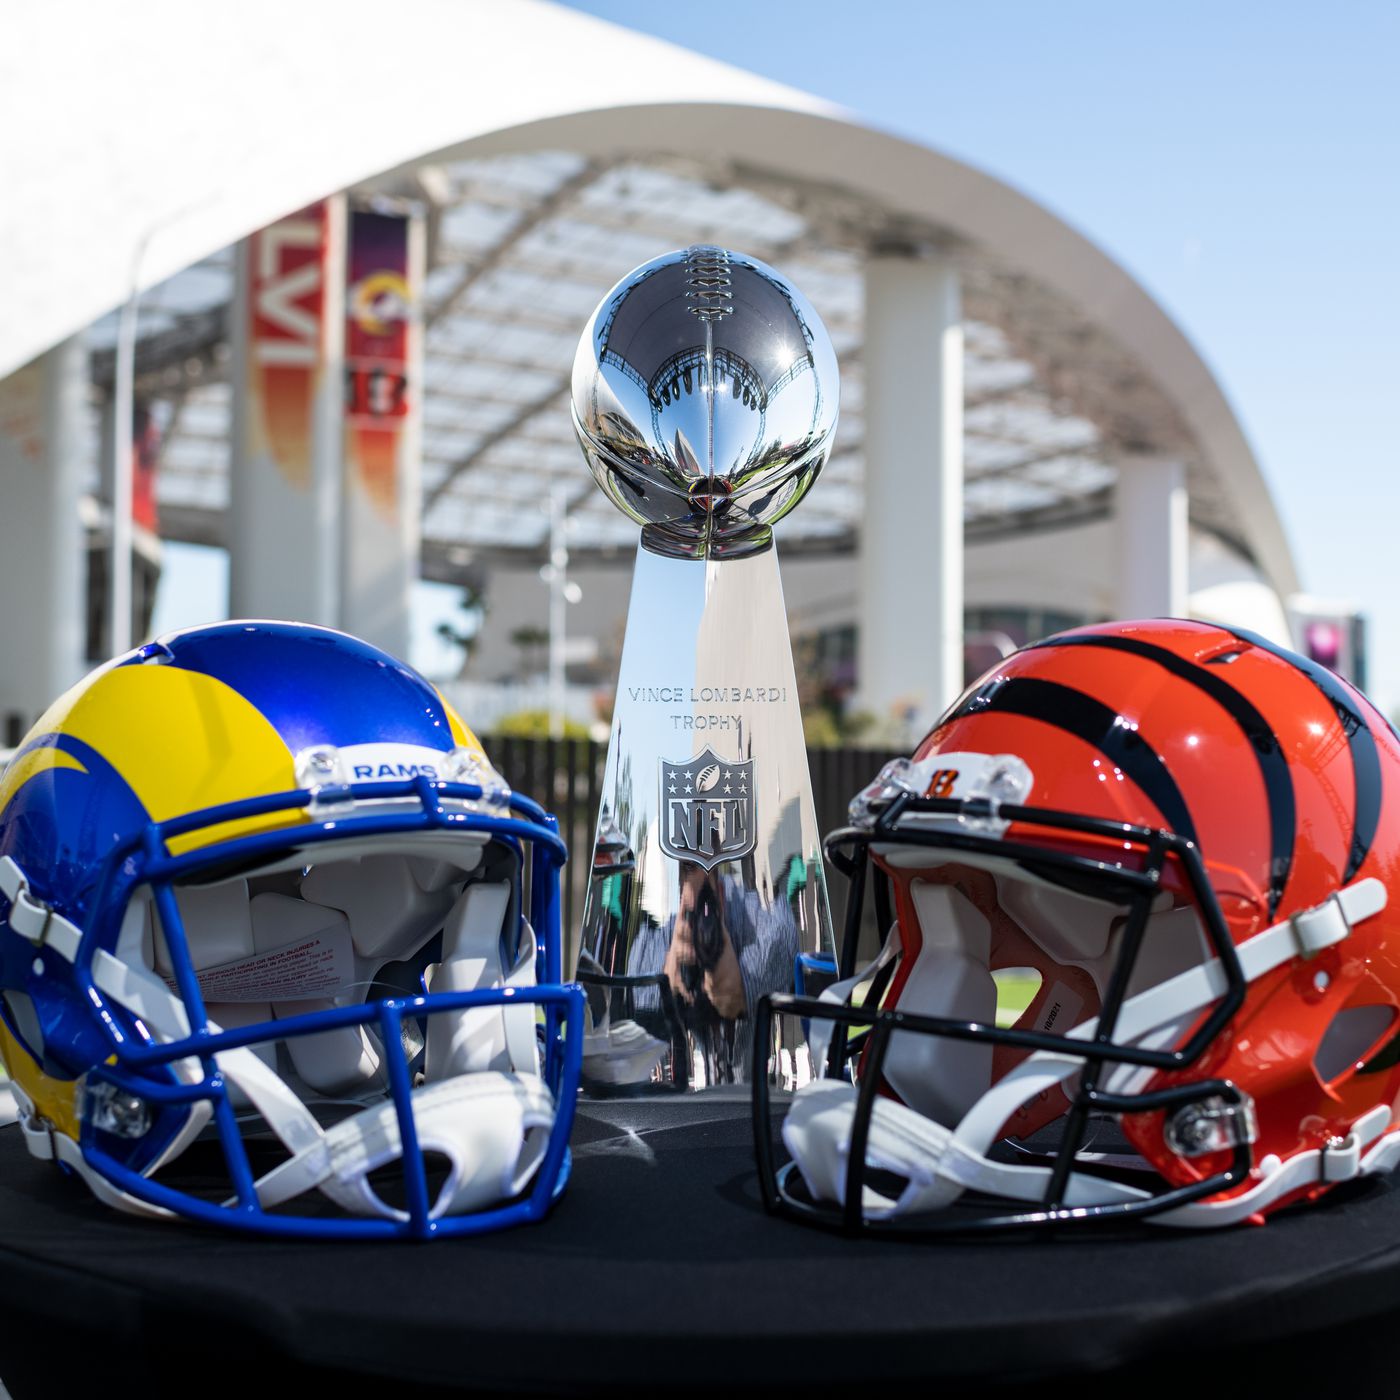 Super Bowl 2022: Matthew Stafford and Rams beat Bengals - Los